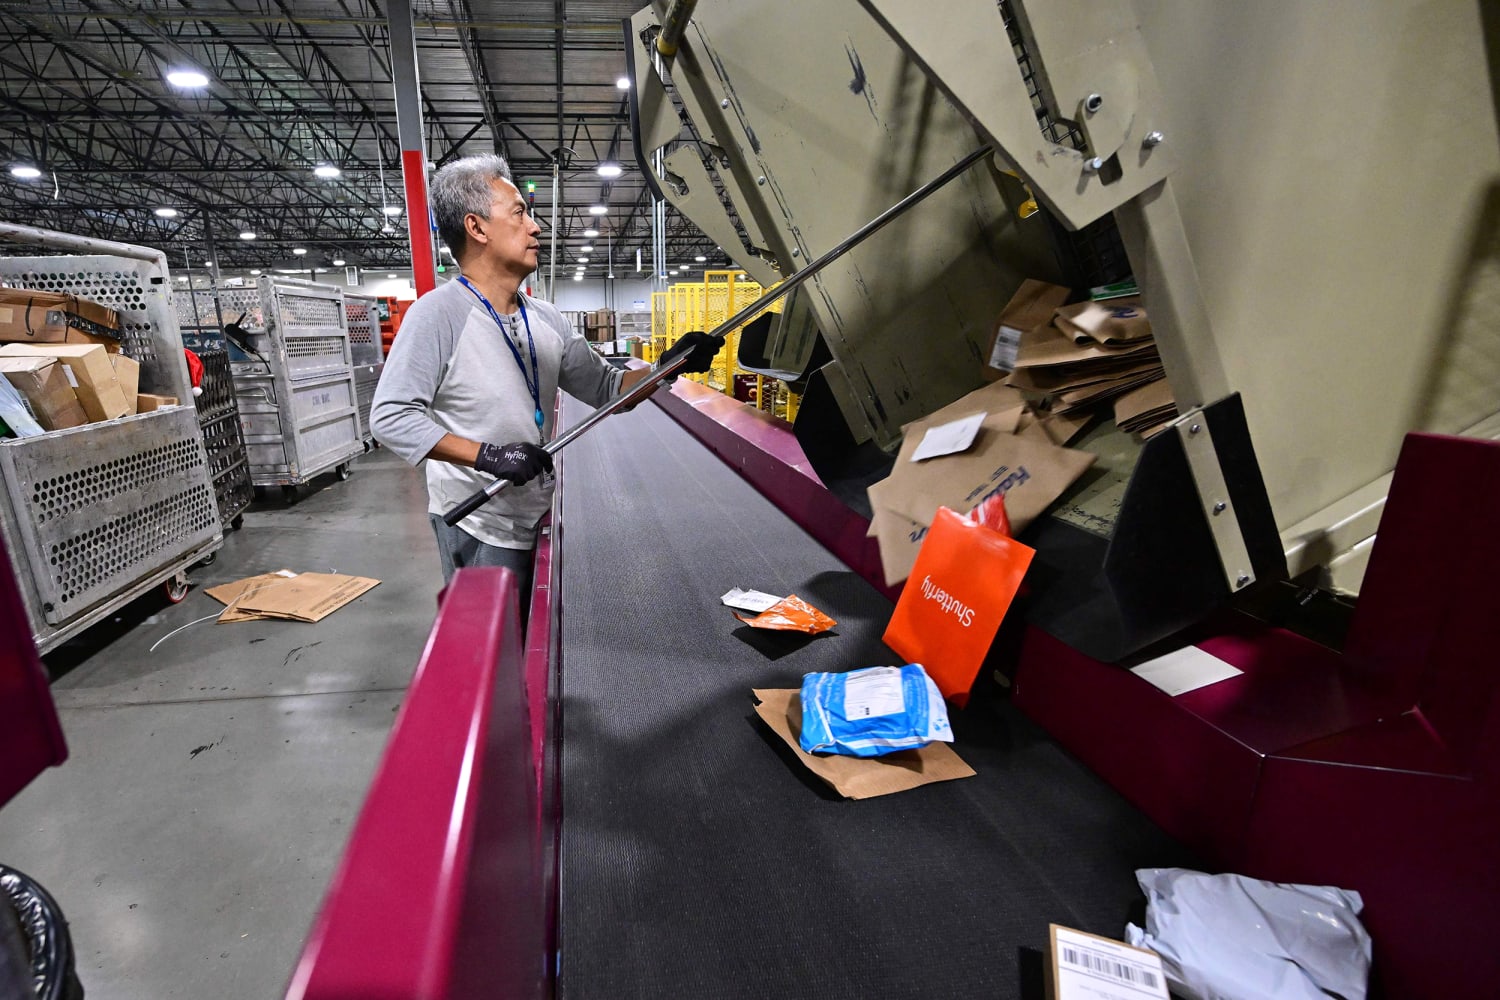 Holiday postal deliveries on track for Christmas despite delays